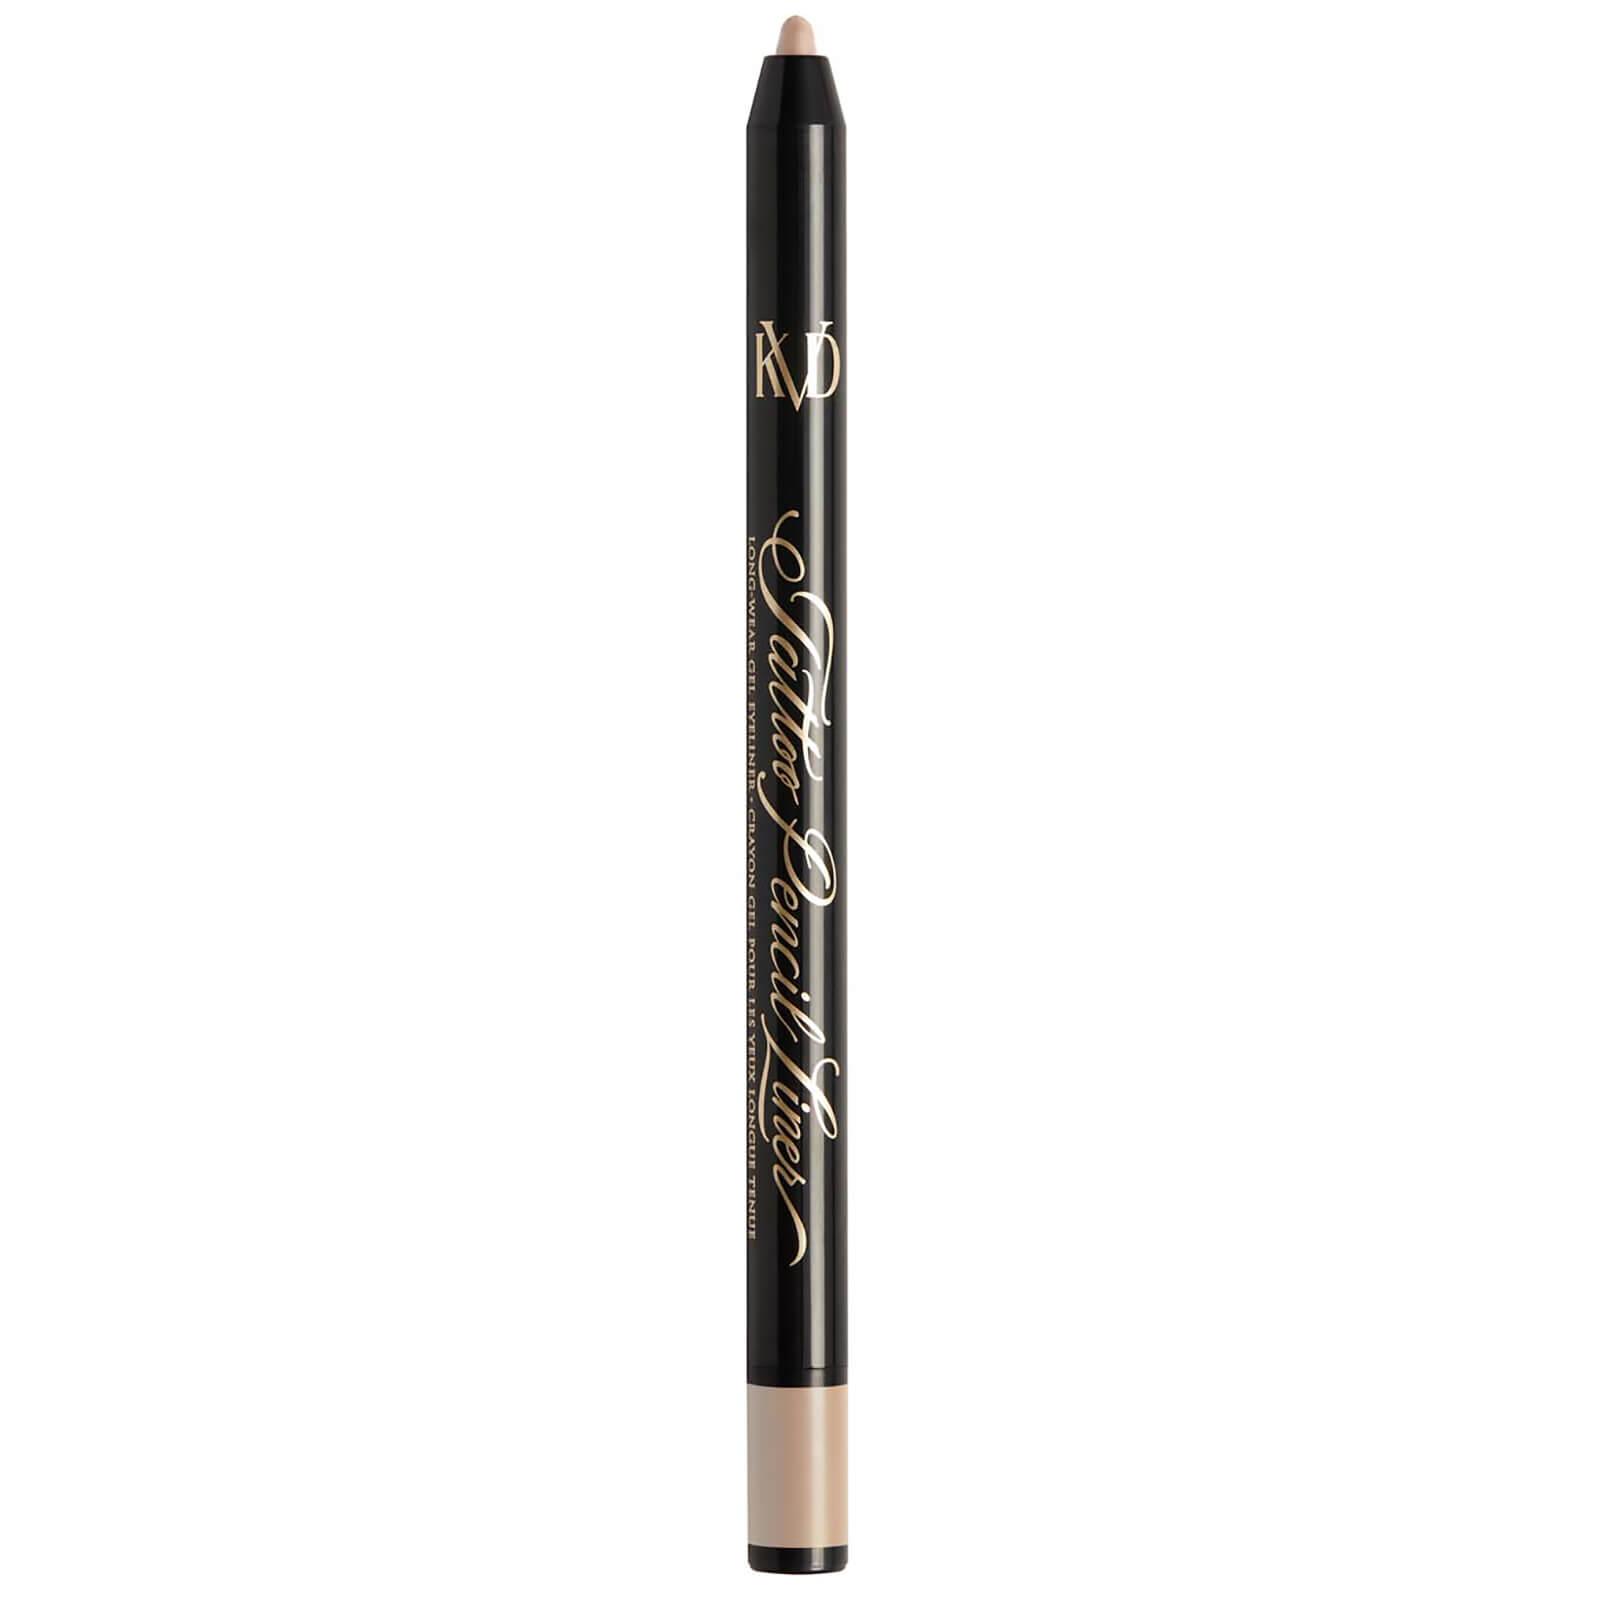 KVD Beauty Tattoo Pencil Liner Long-Wear Gel Eyeliner 0.5g (Various Shades) - Canvas Beige 150